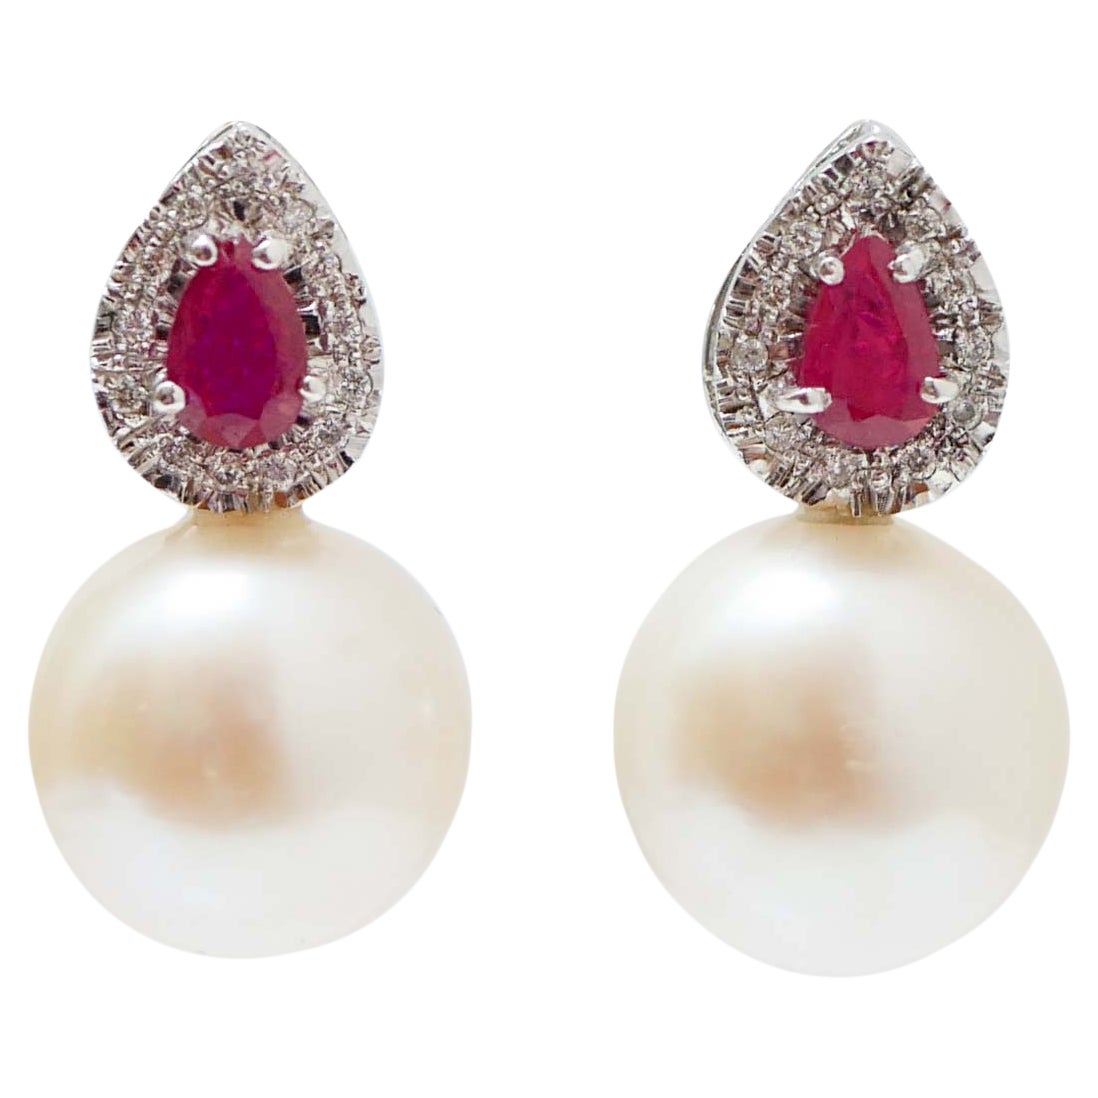 White Pearls, Rubies, Diamonds, Platinum Earrings. For Sale